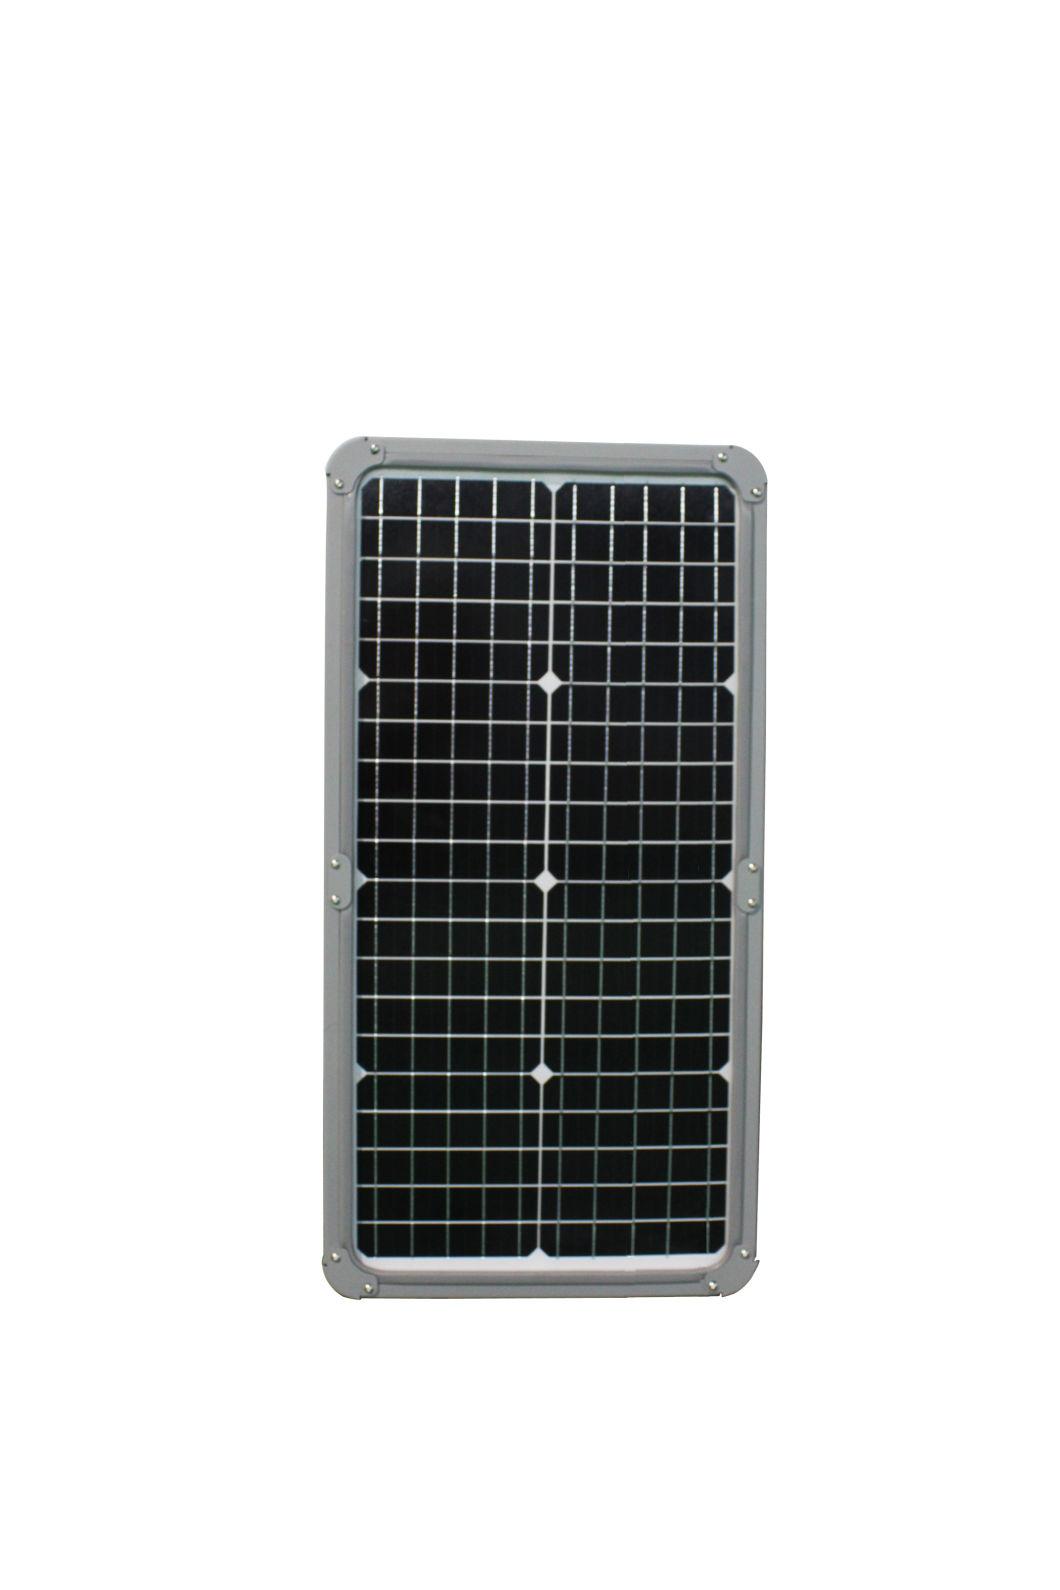 Shineopto Professional Manufacture LED Solar Panel Street Light 60W